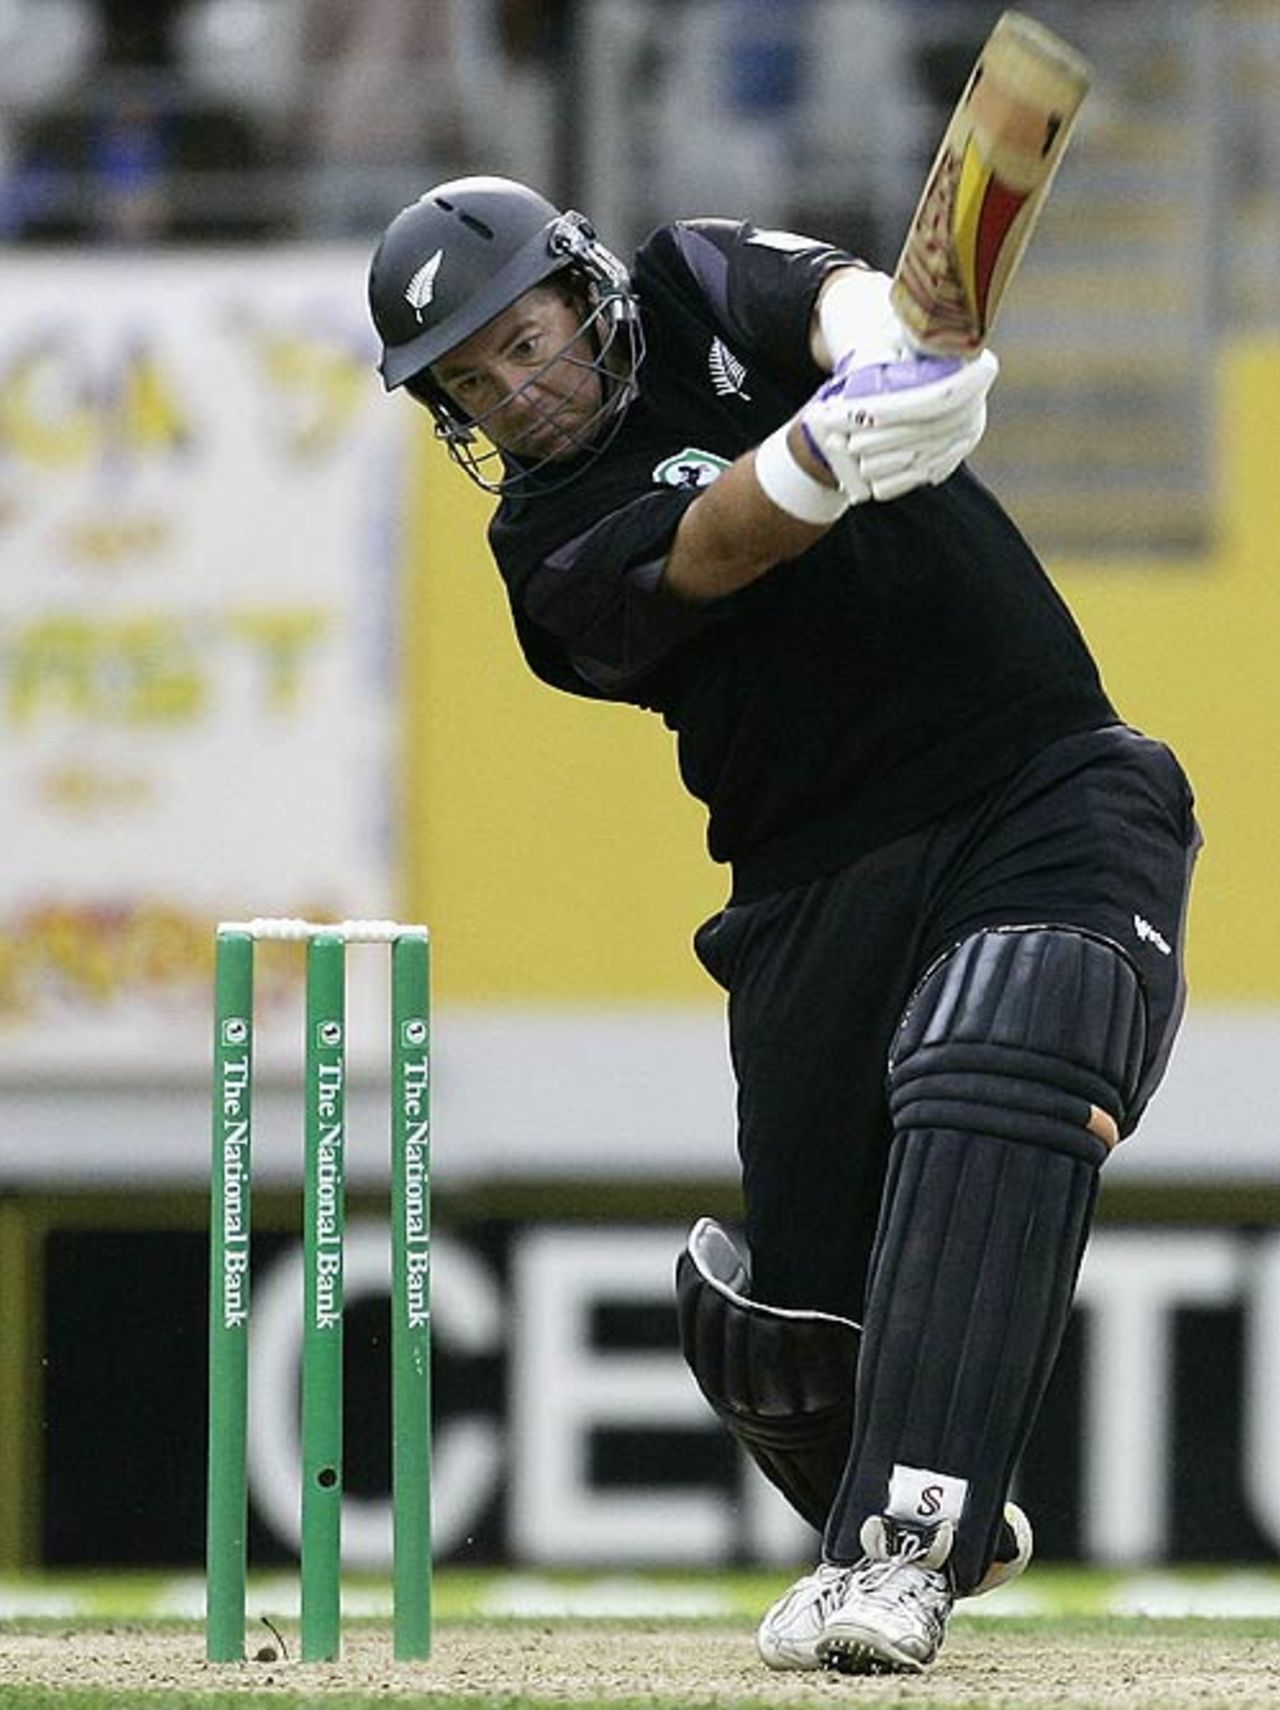 Craig McMillan top-scored with an unbeaten 29 as wickets tumbled around him, New Zealand v Sri Lanka, 4th ODI, Eden Park, January 6, 2007